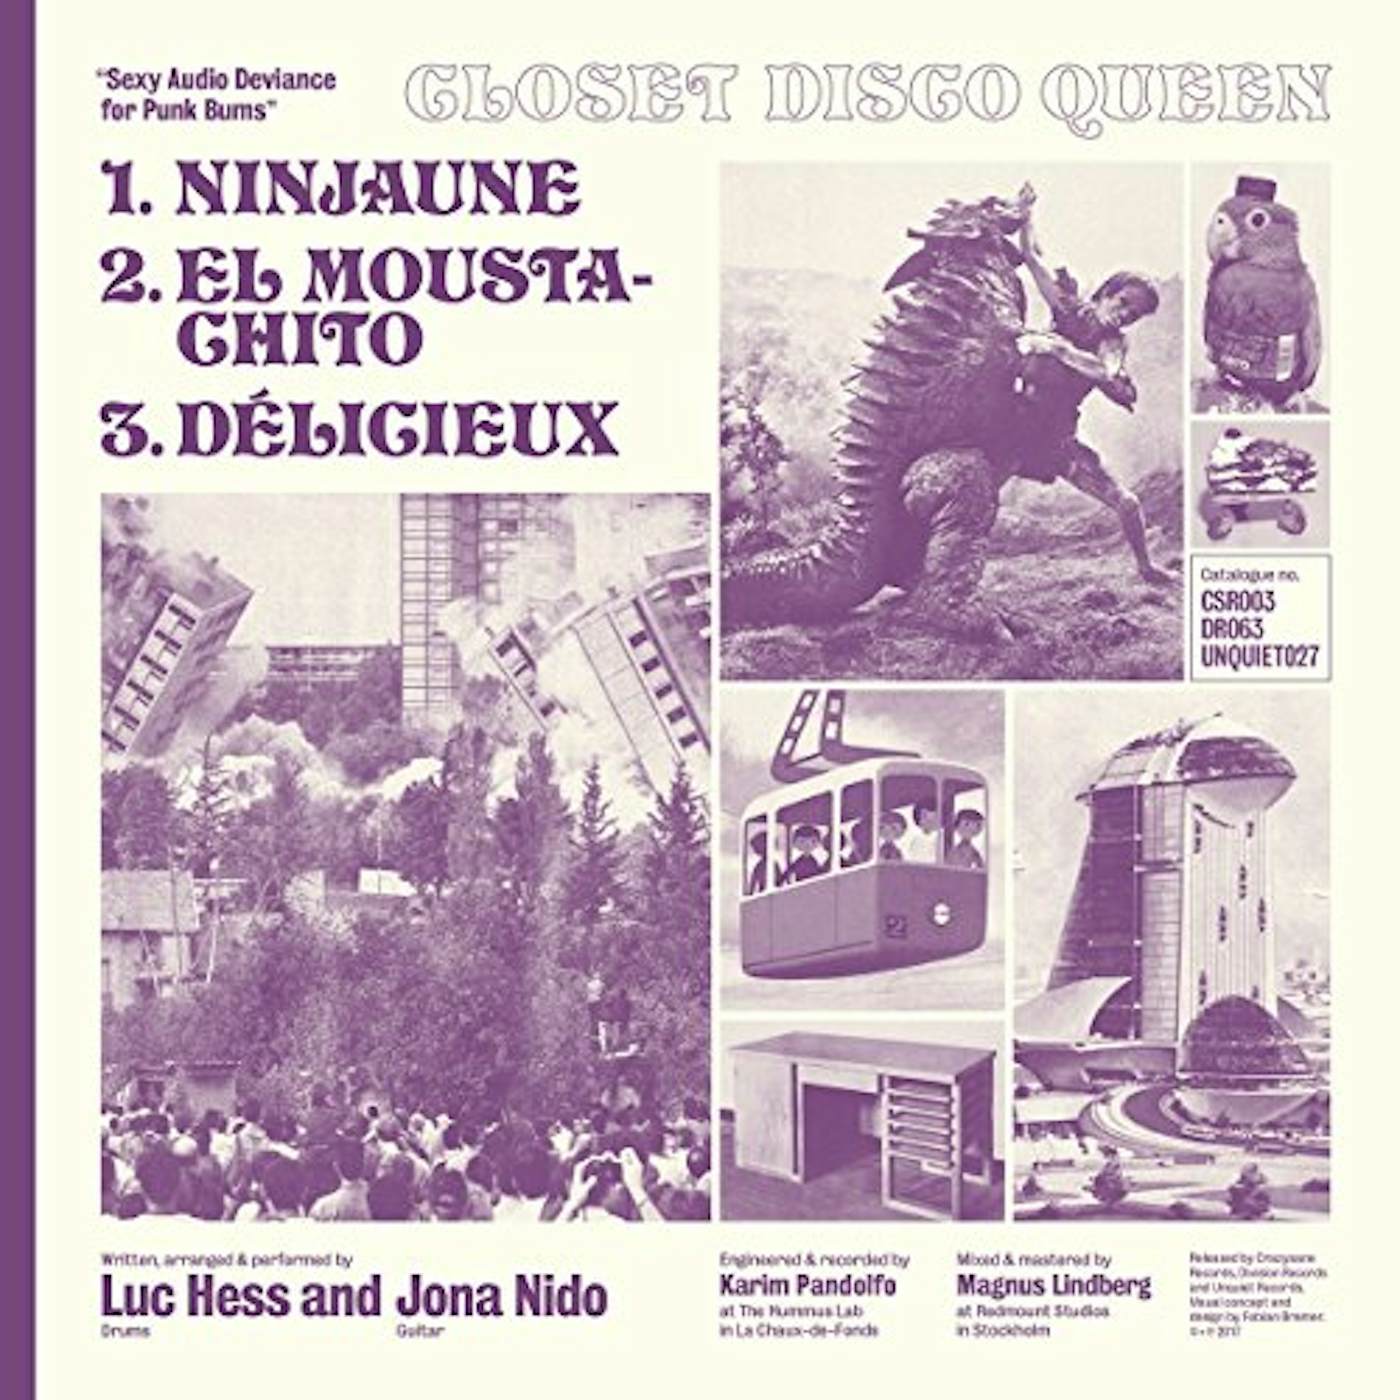 Closet Disco Queen Sexy Audio Deviance for Punk Bums Vinyl Record